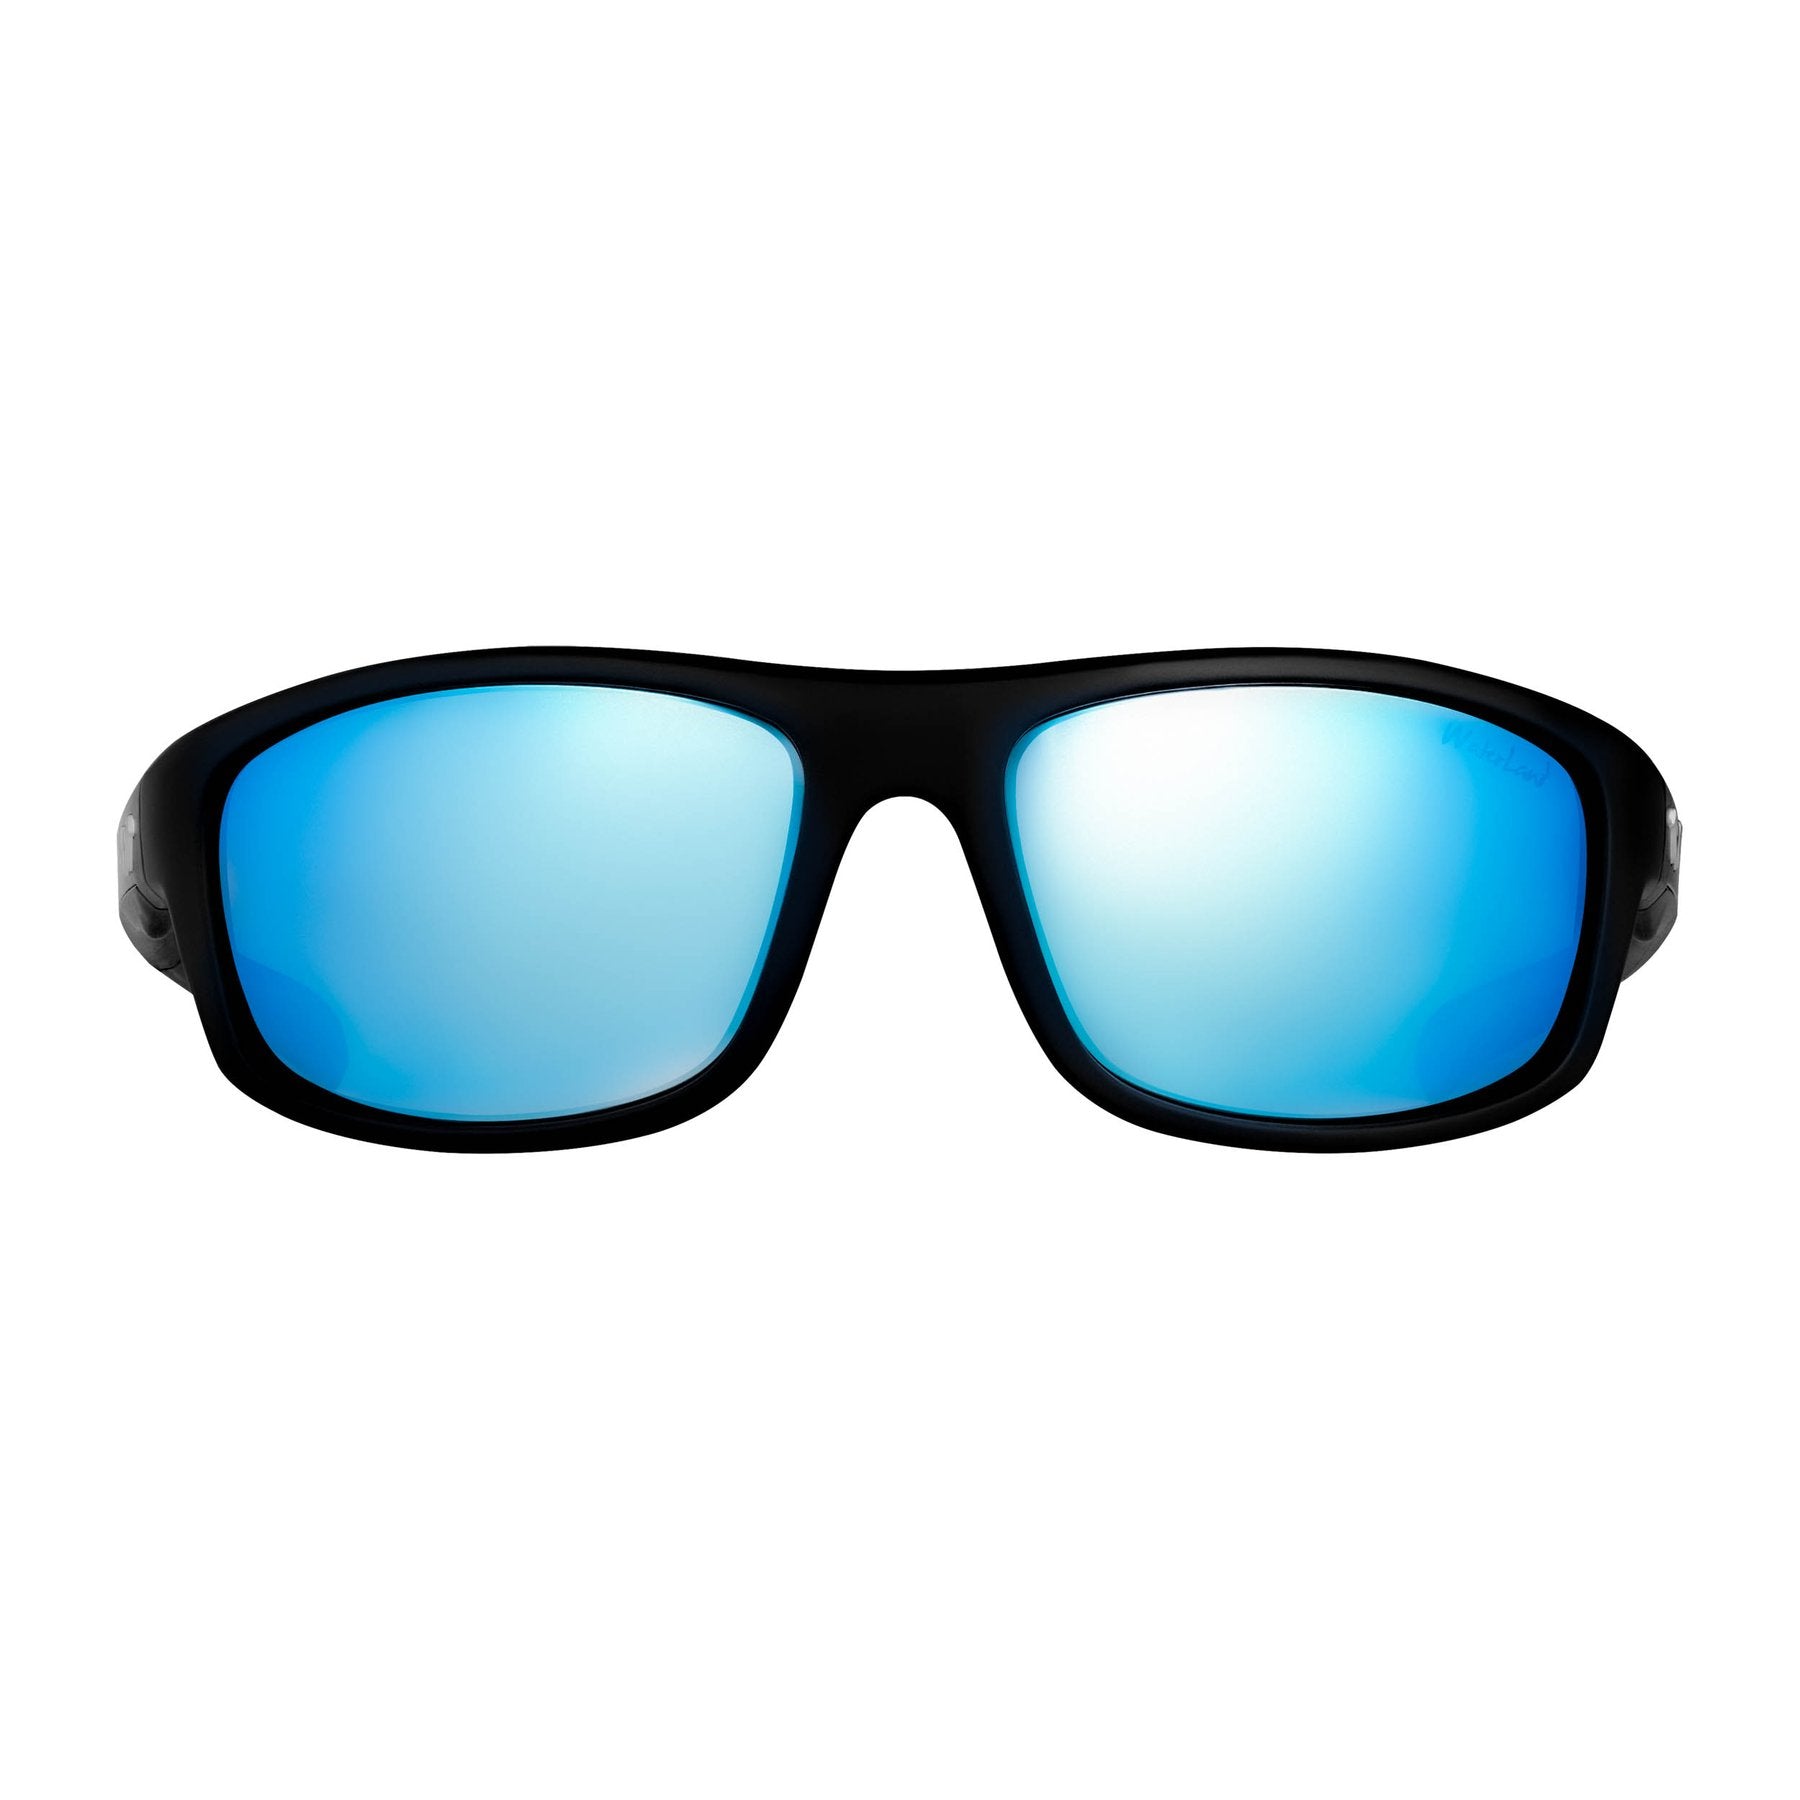 Waterland Fishing Sunglasses Hasket / Black / SilverSight Mirror Glass